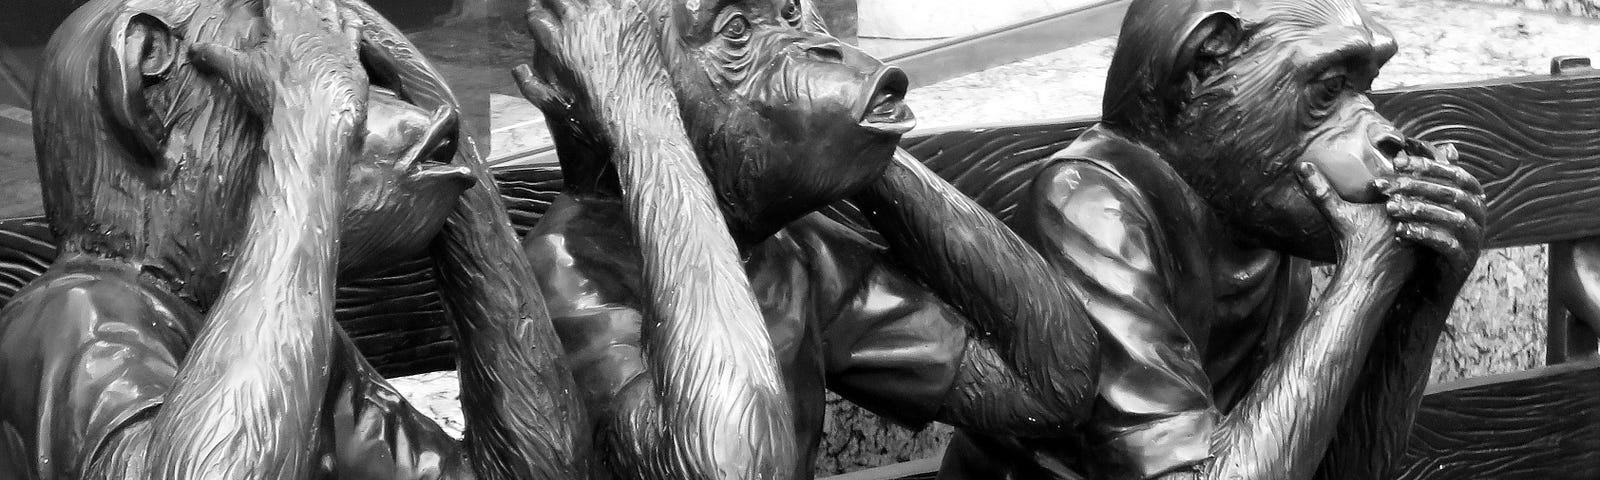 Three ape statues see no evil, hear no evil, speak no evil